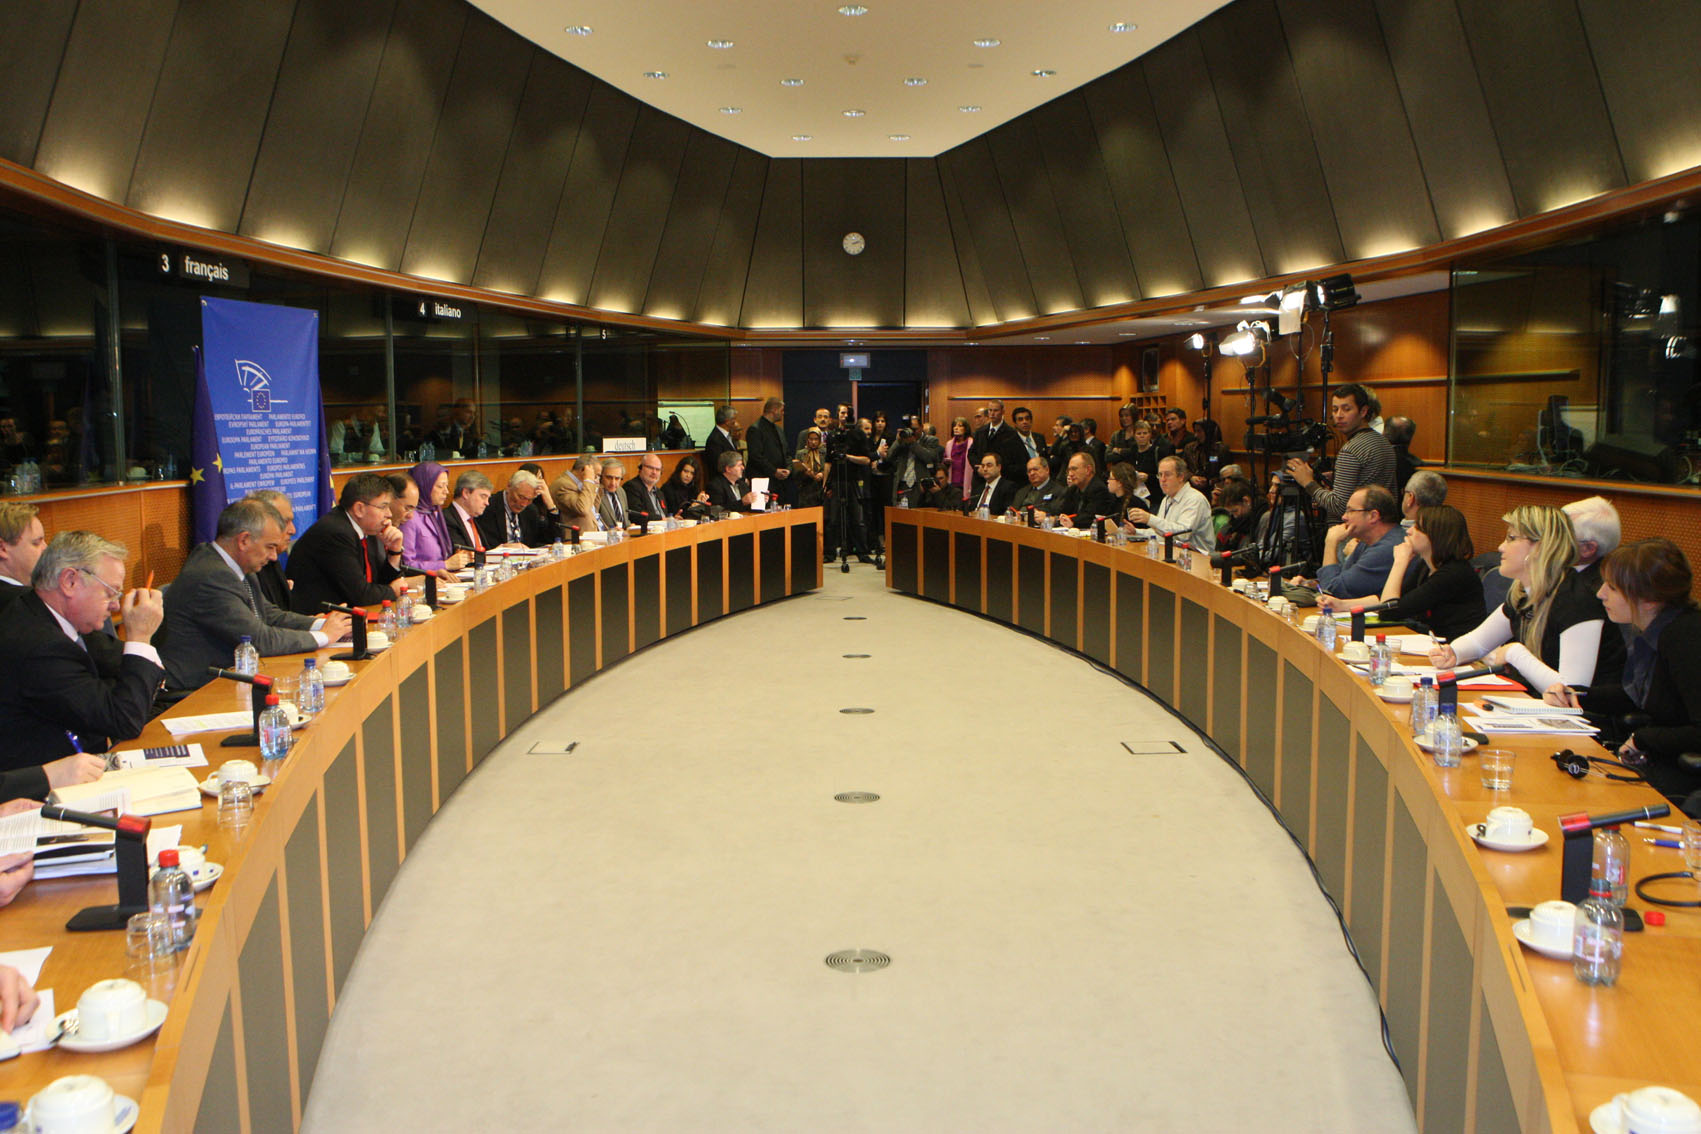 Maryam Rajavi at European Parliament: "Women are vanguard of democratic change in Iran"